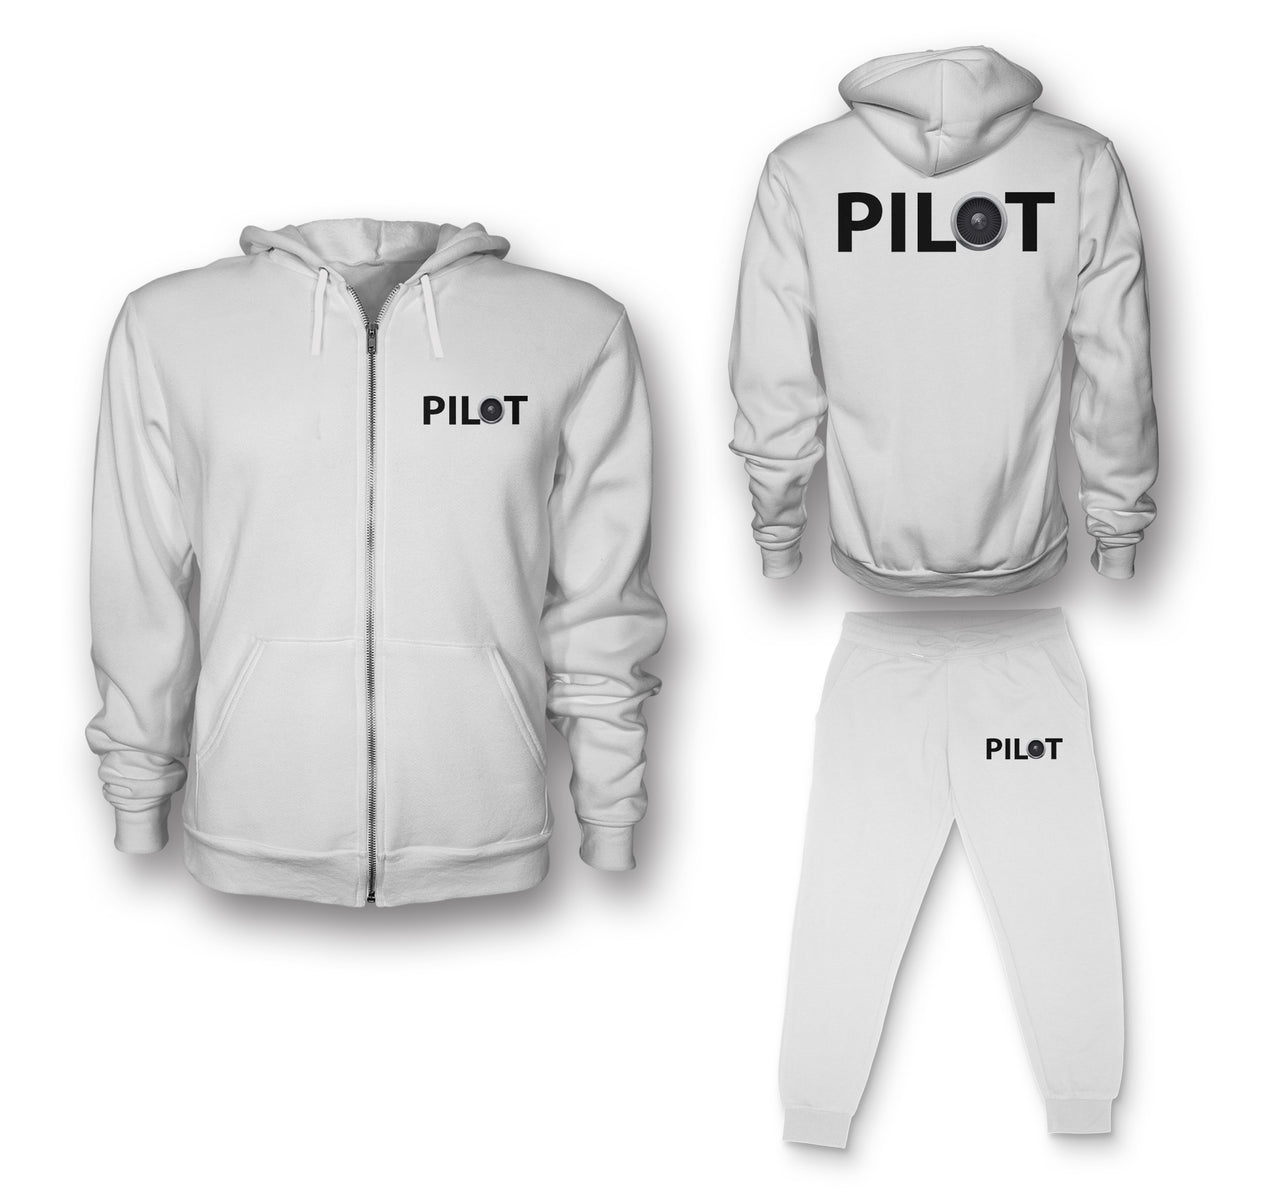 Pilot & Jet Engine Designed Zipped Hoodies & Sweatpants Set